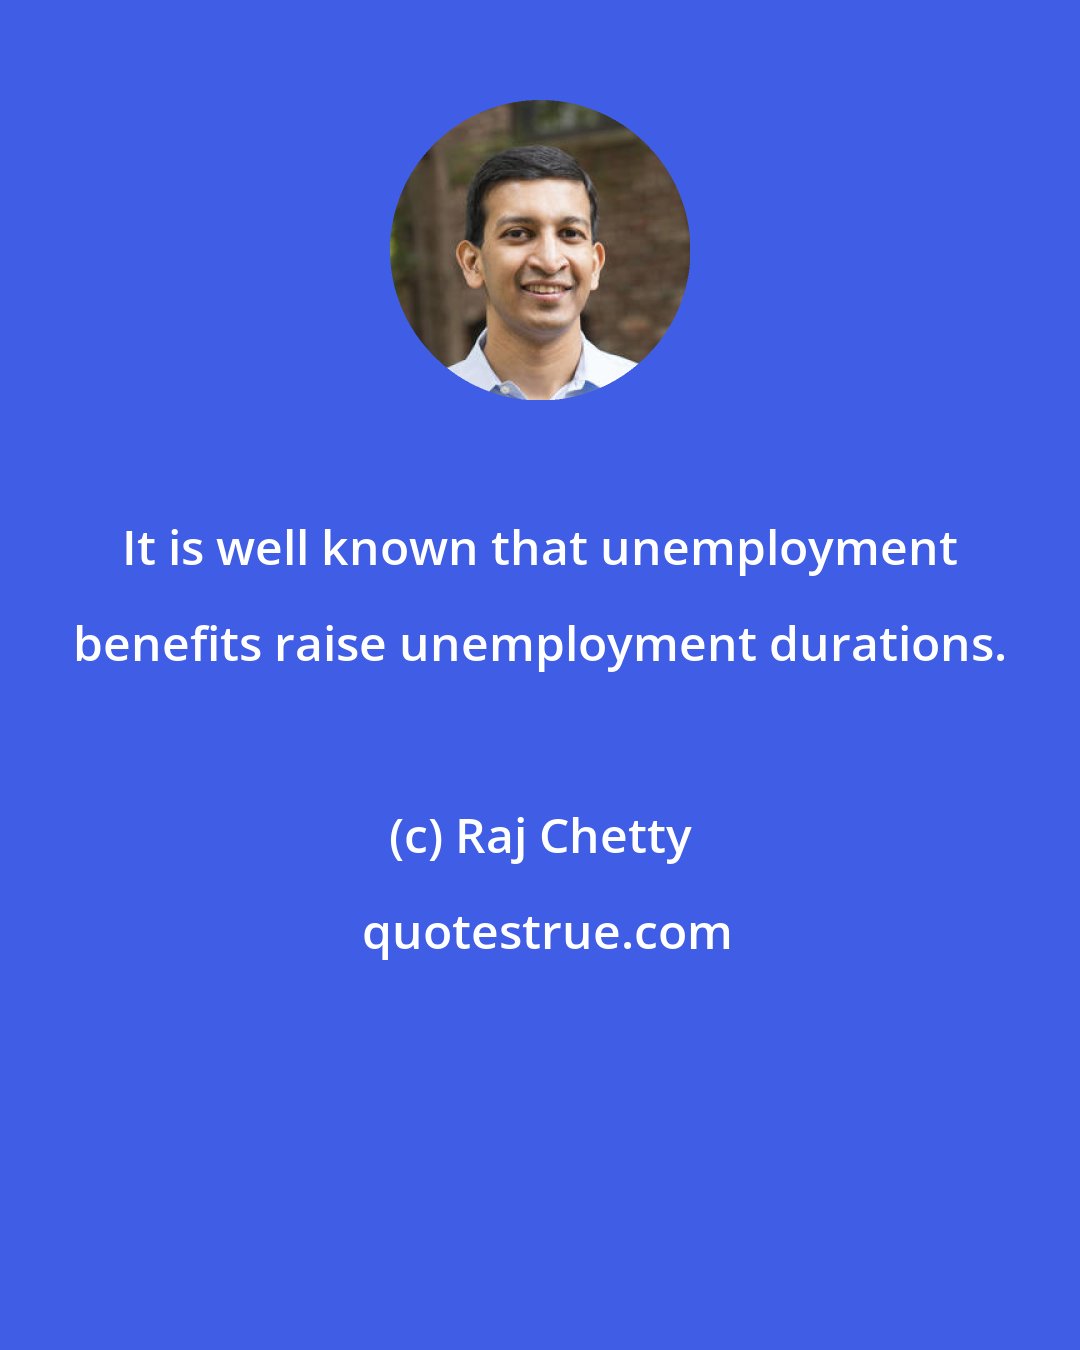 Raj Chetty: It is well known that unemployment benefits raise unemployment durations.